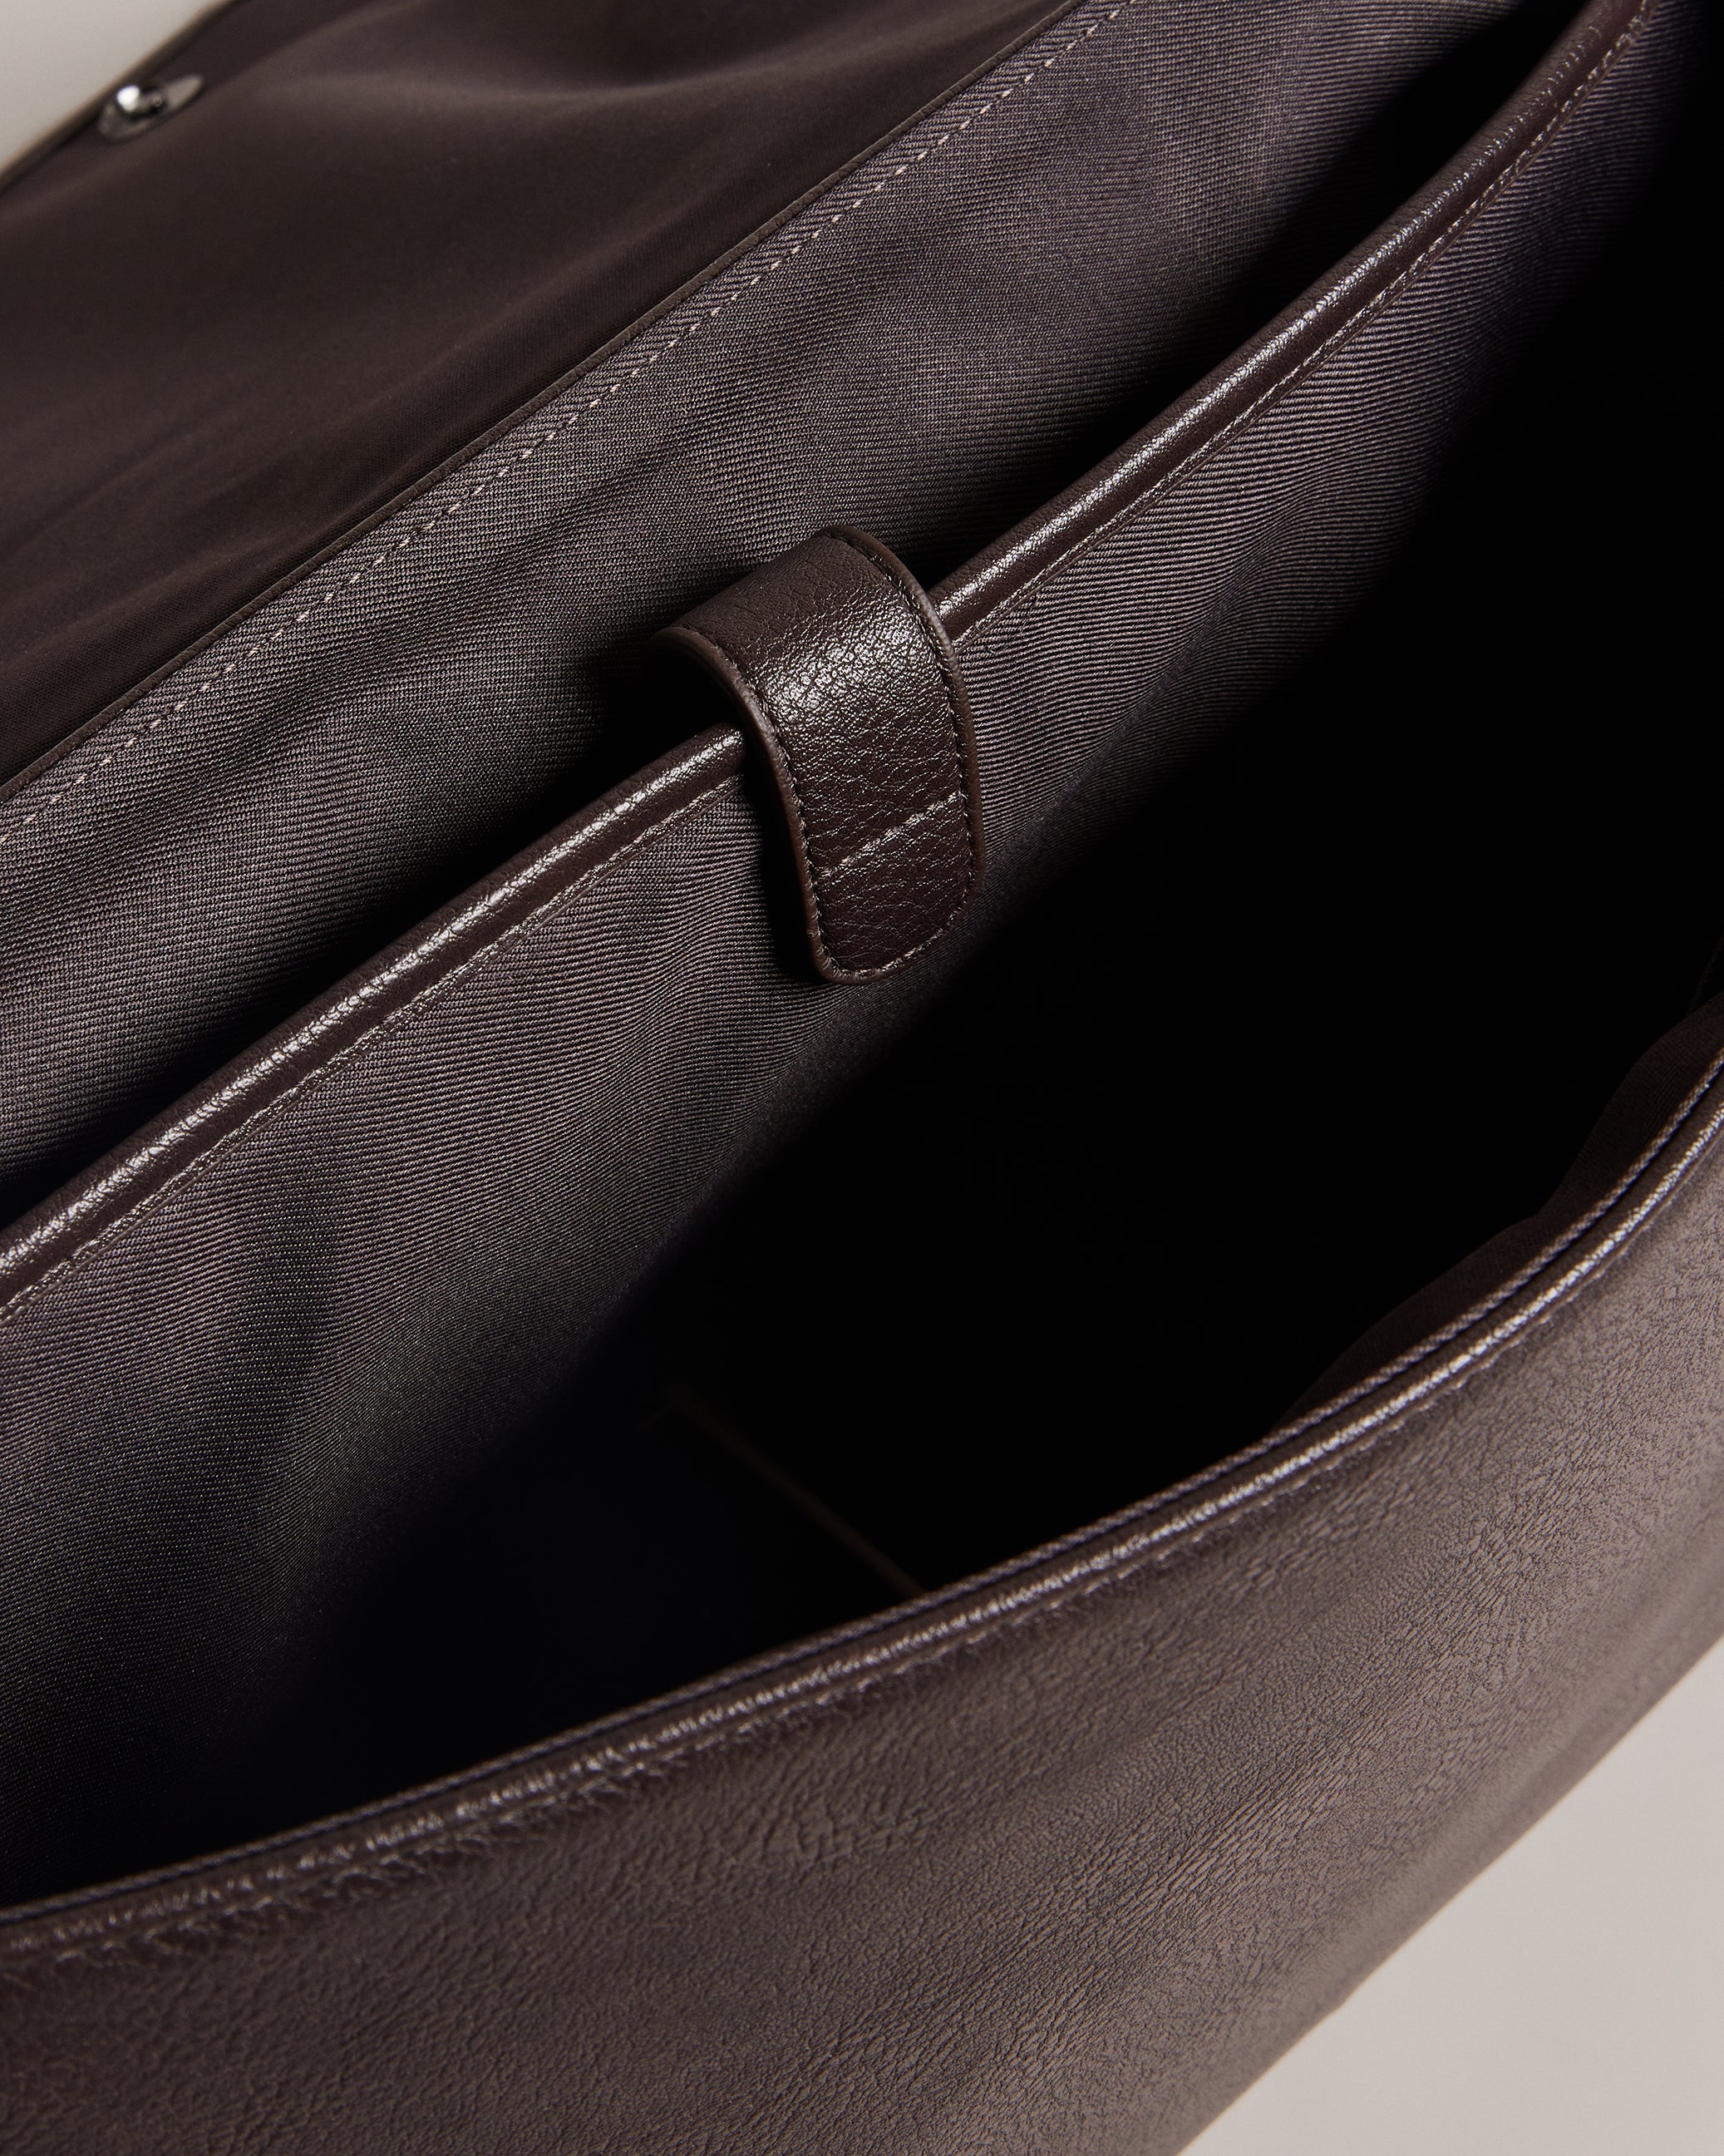 Evelake Striped Faux Leather Messenger Bag Brn-Choc